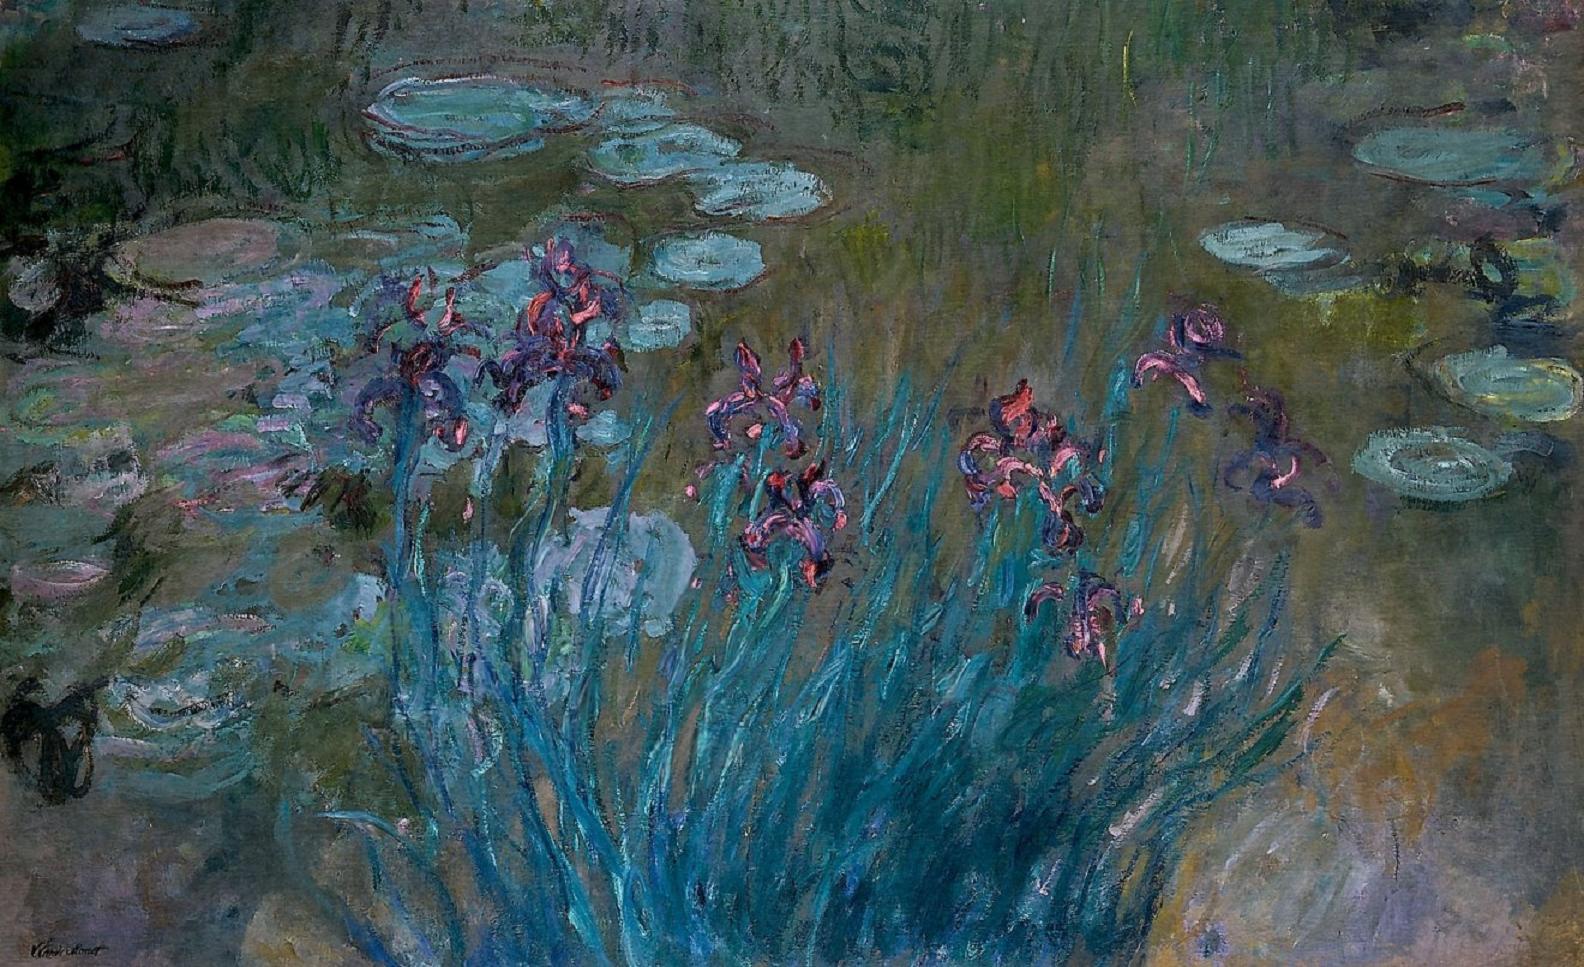 Claude+Monet-1840-1926 (910).jpg